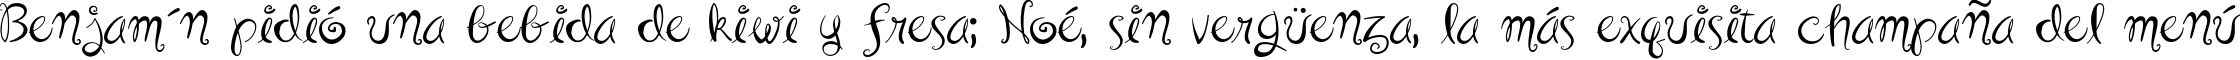 Пример написания шрифтом Flowerpot текста на испанском